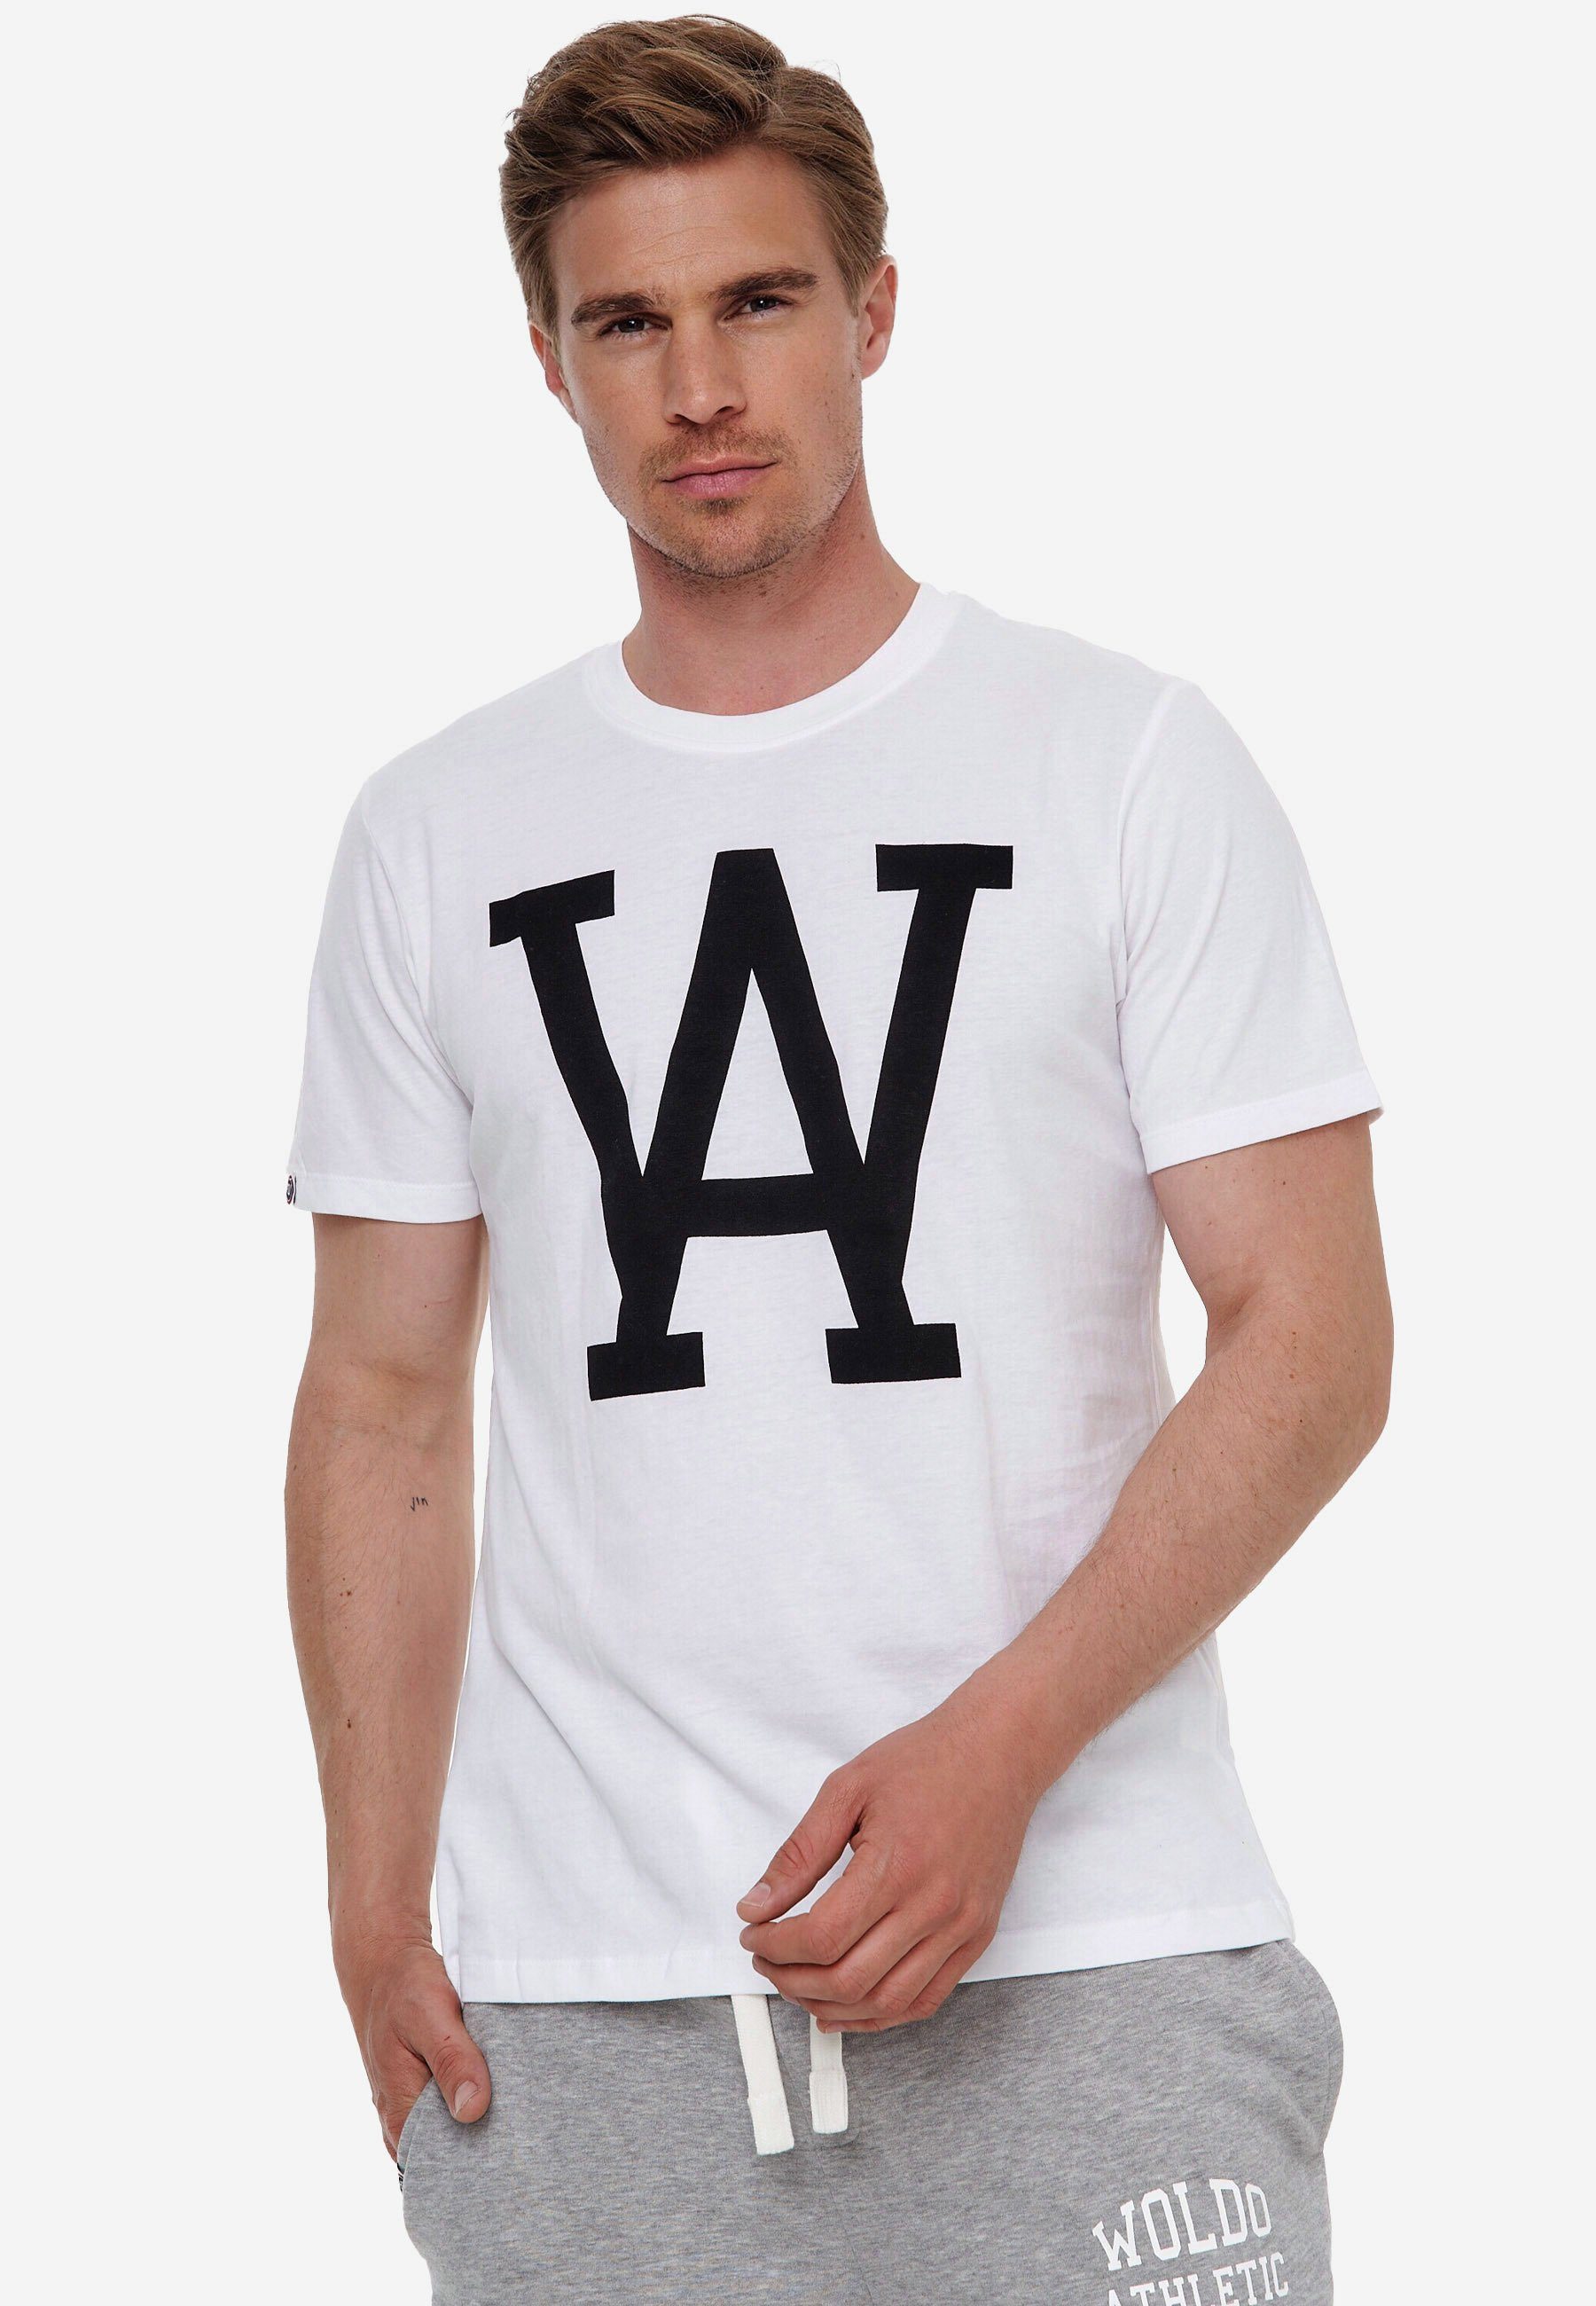 Woldo Athletic T-Shirt T-Shirt Big WA weiß-schwarz | T-Shirts